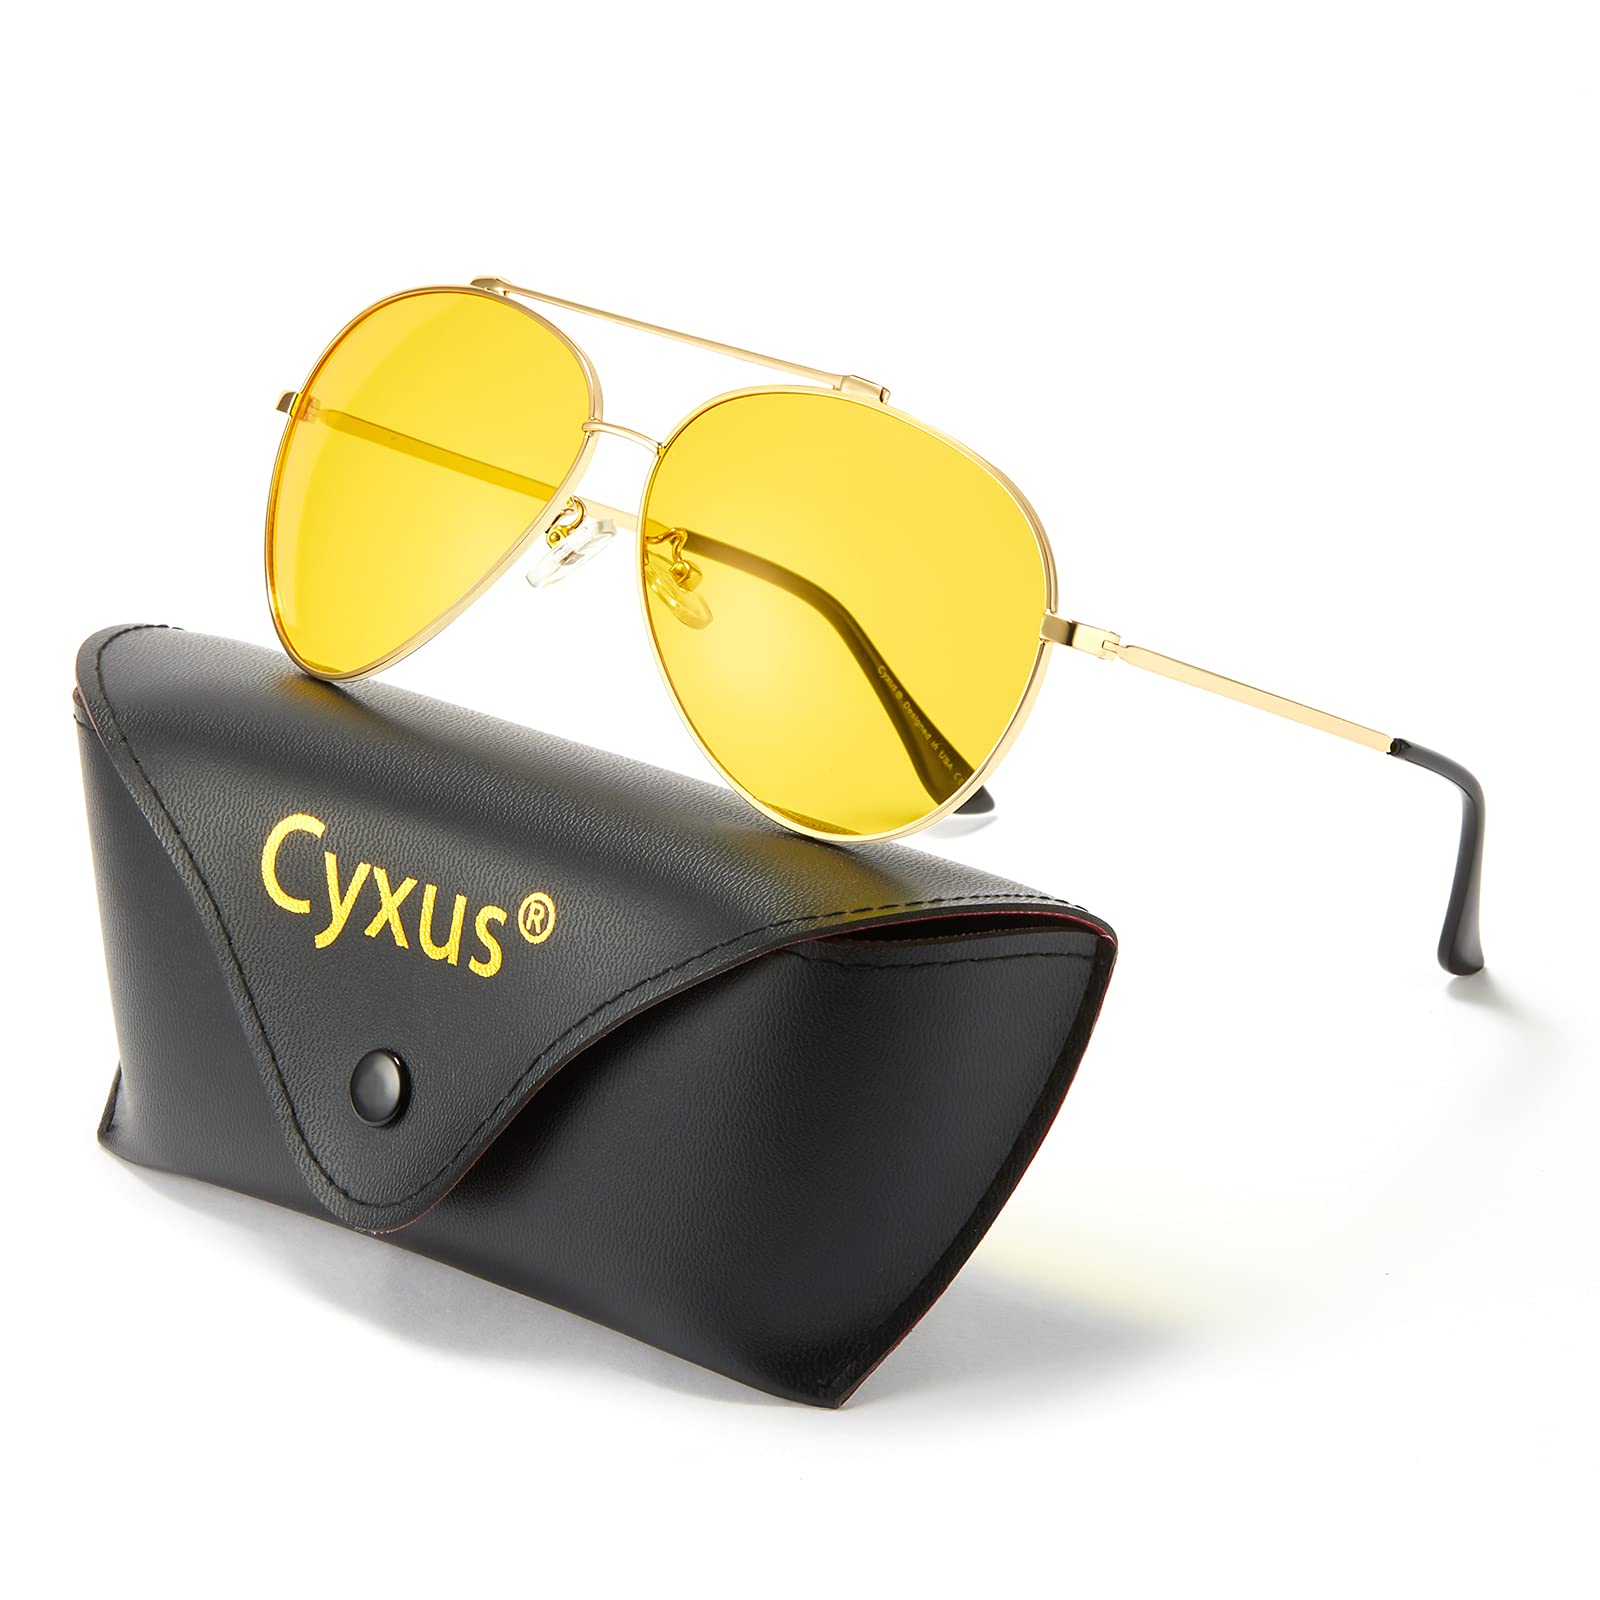 Cyxus Aviator Glasses Stylish Blue Light Blocking Eyeglasses Computer Eyewear Anti Eyestrain Metal Frame Yellow Lens Gold